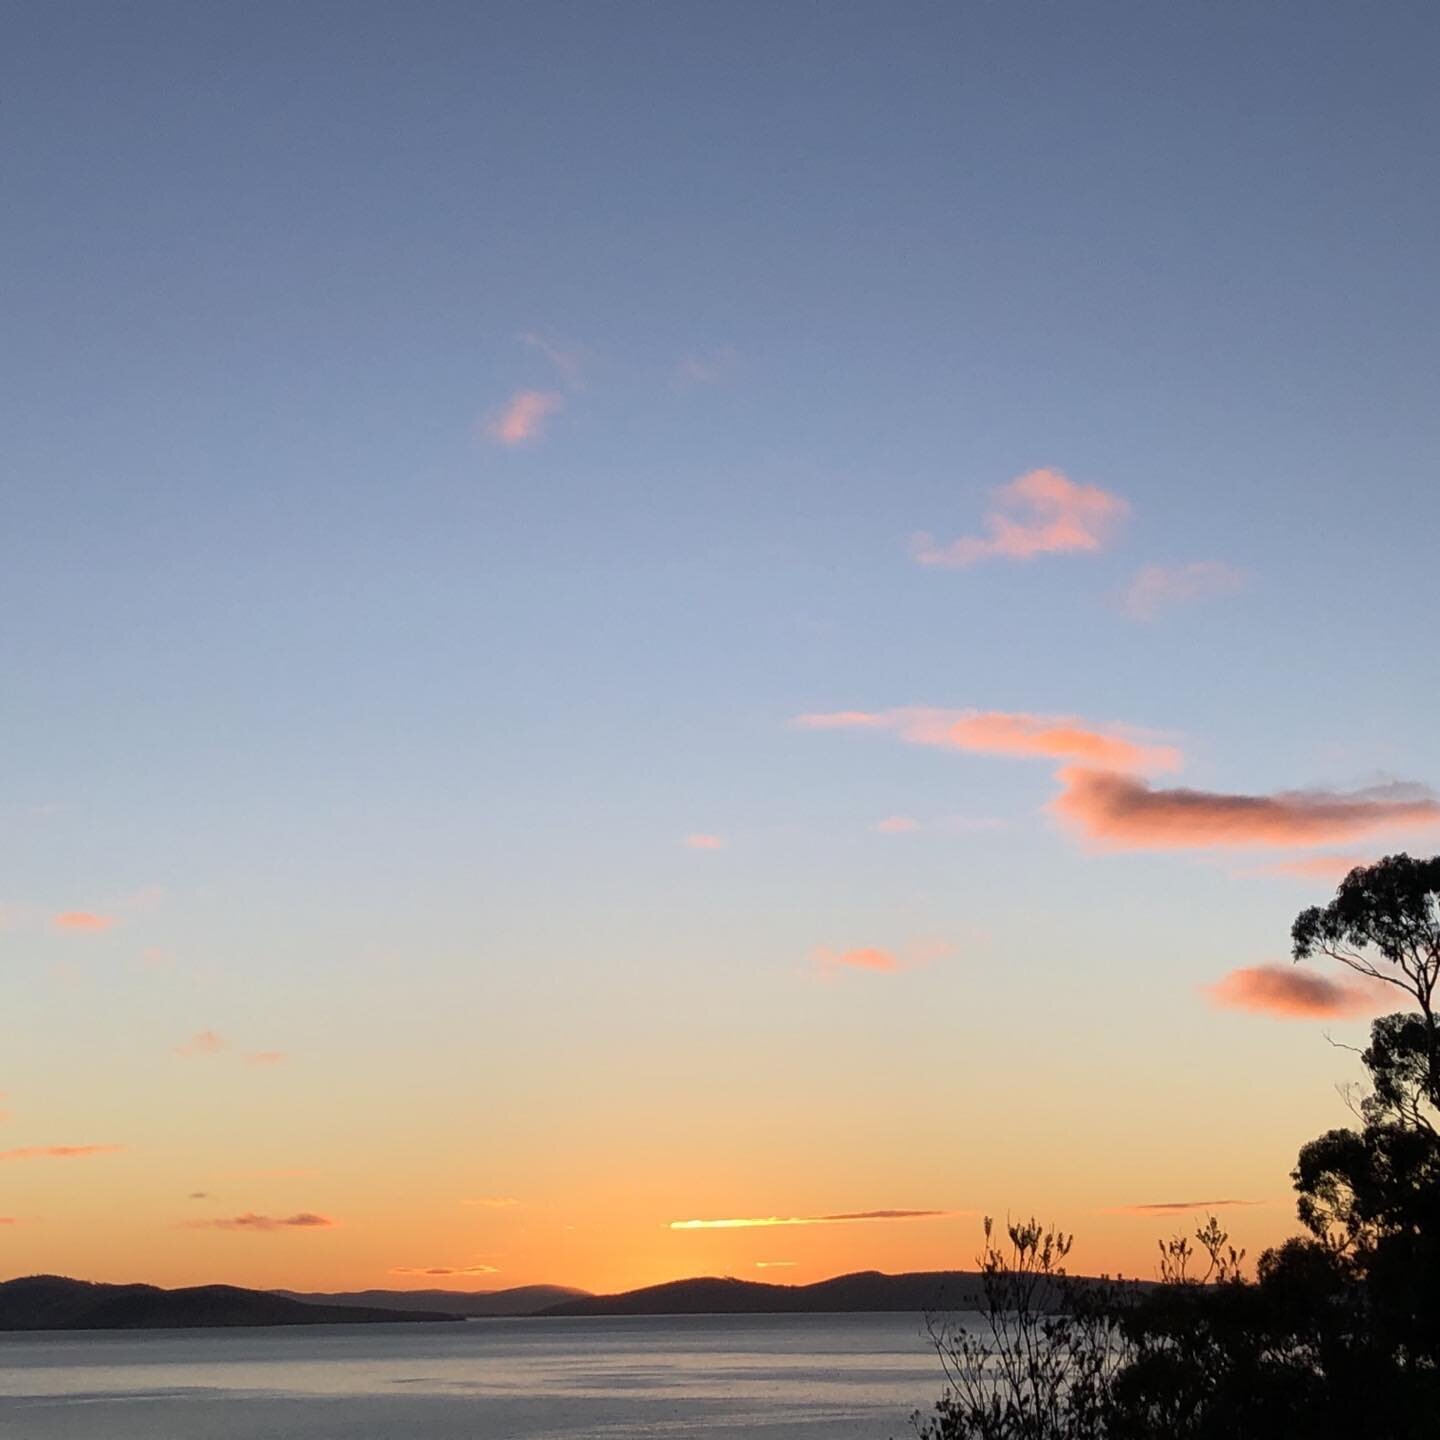 Good morning Hobart!
Happy Wednesday 😁